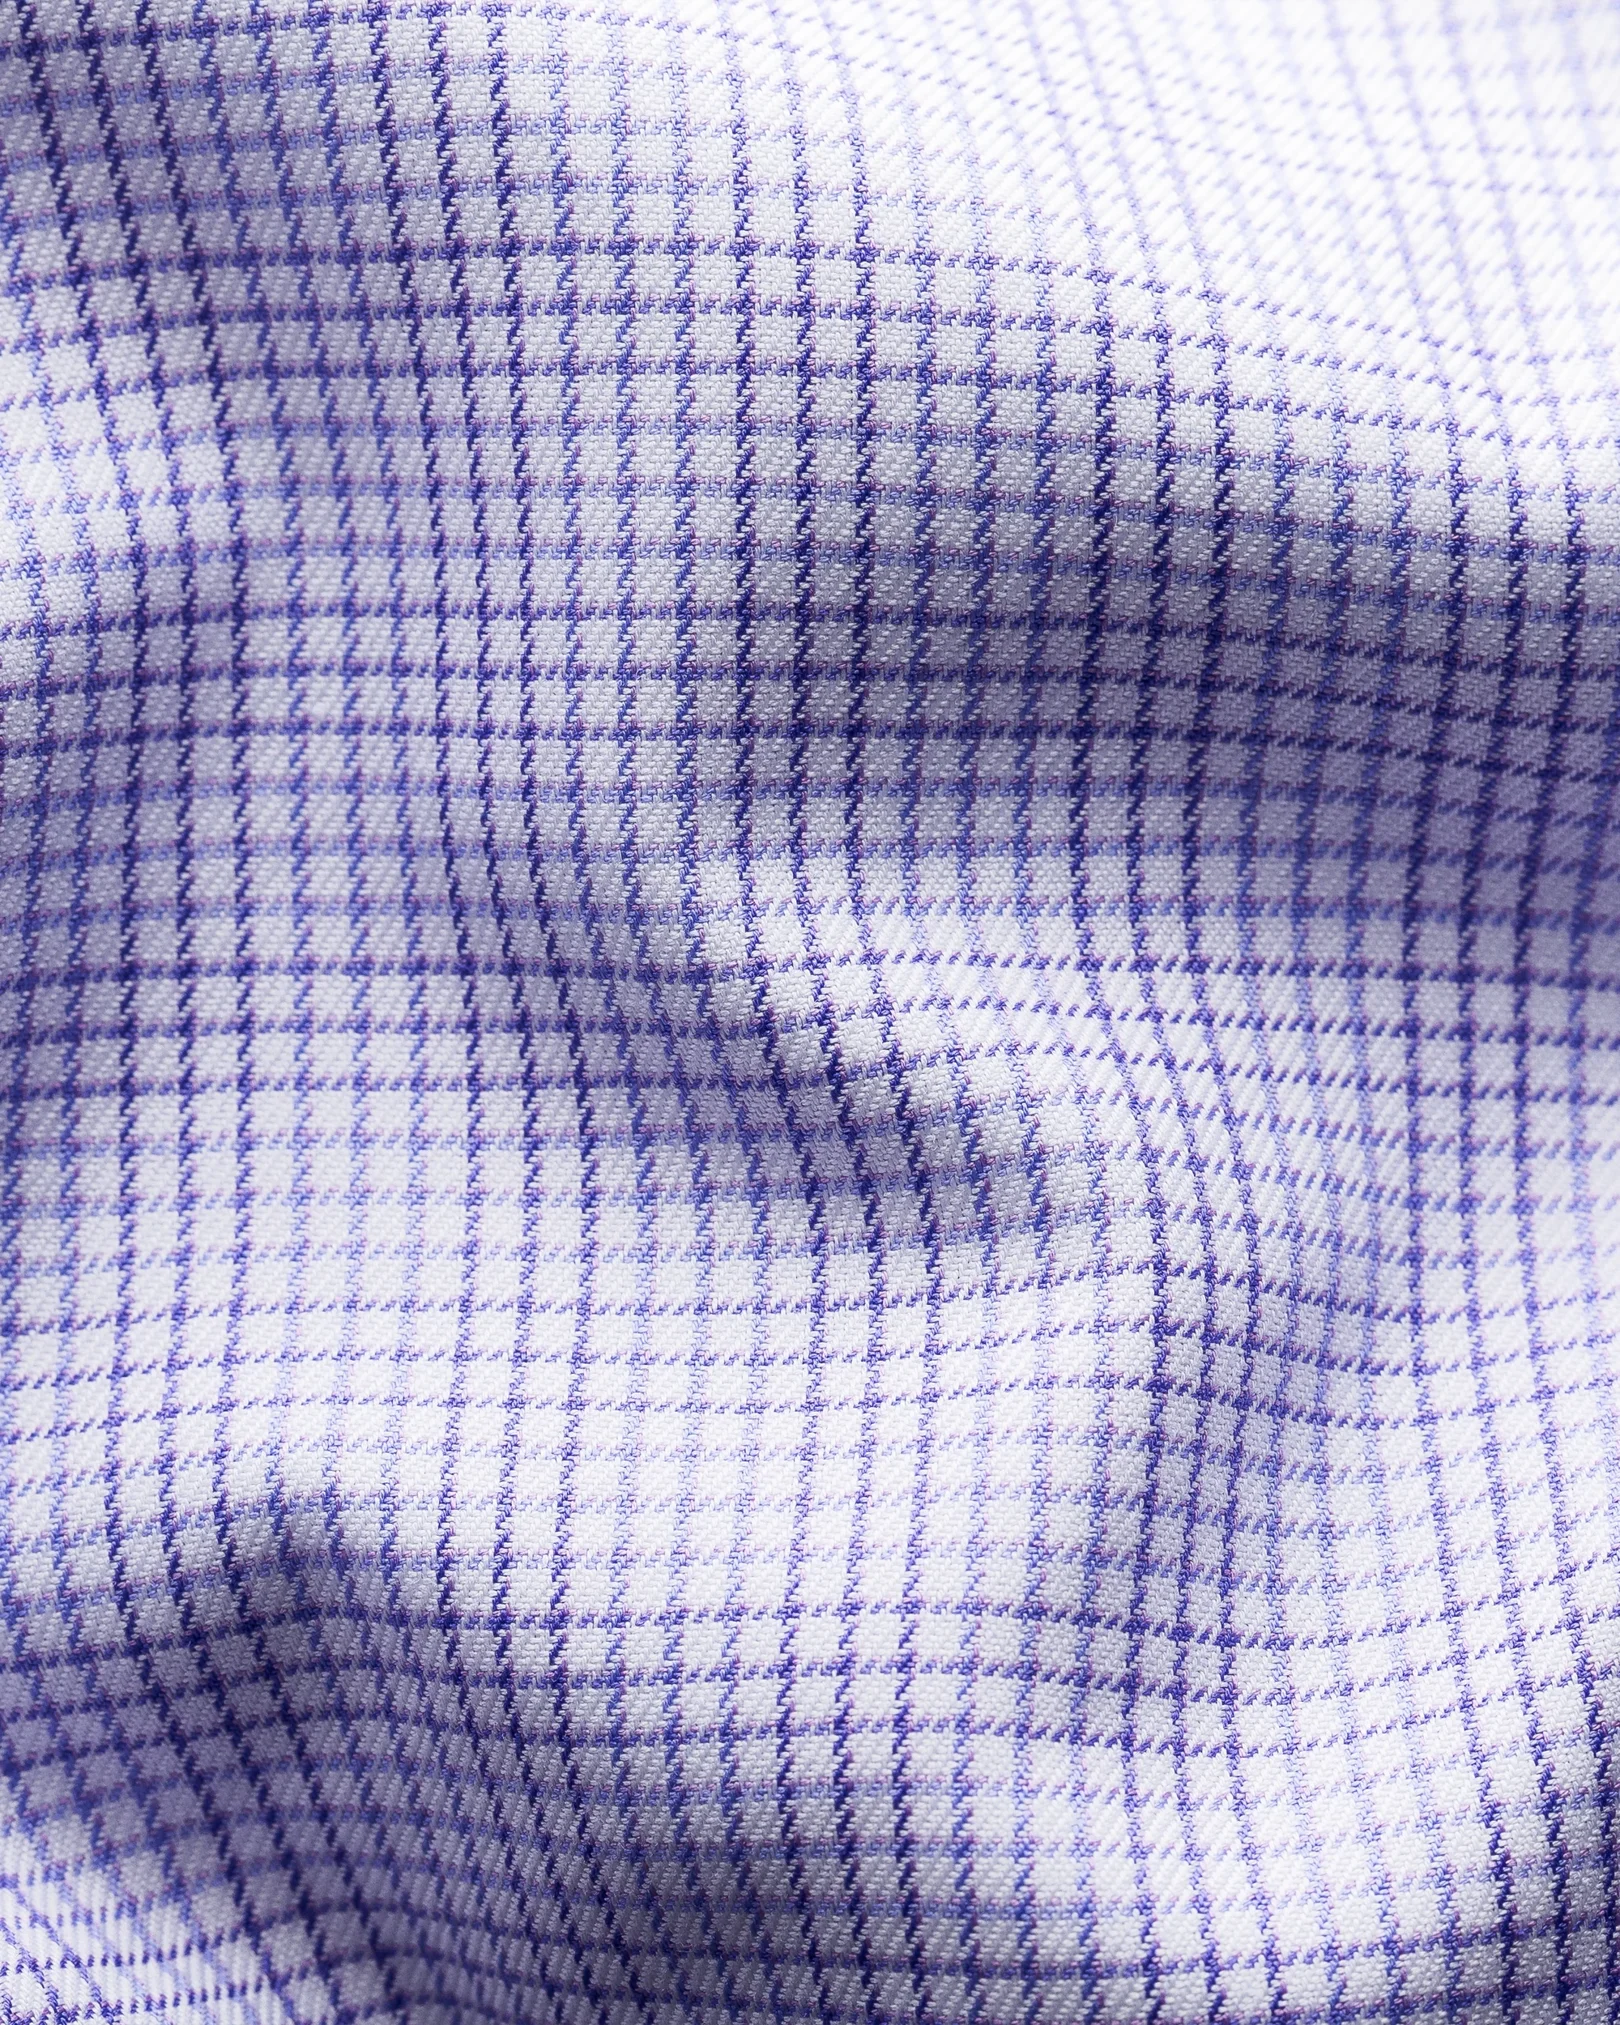 Eton - purple double checked twill shirt